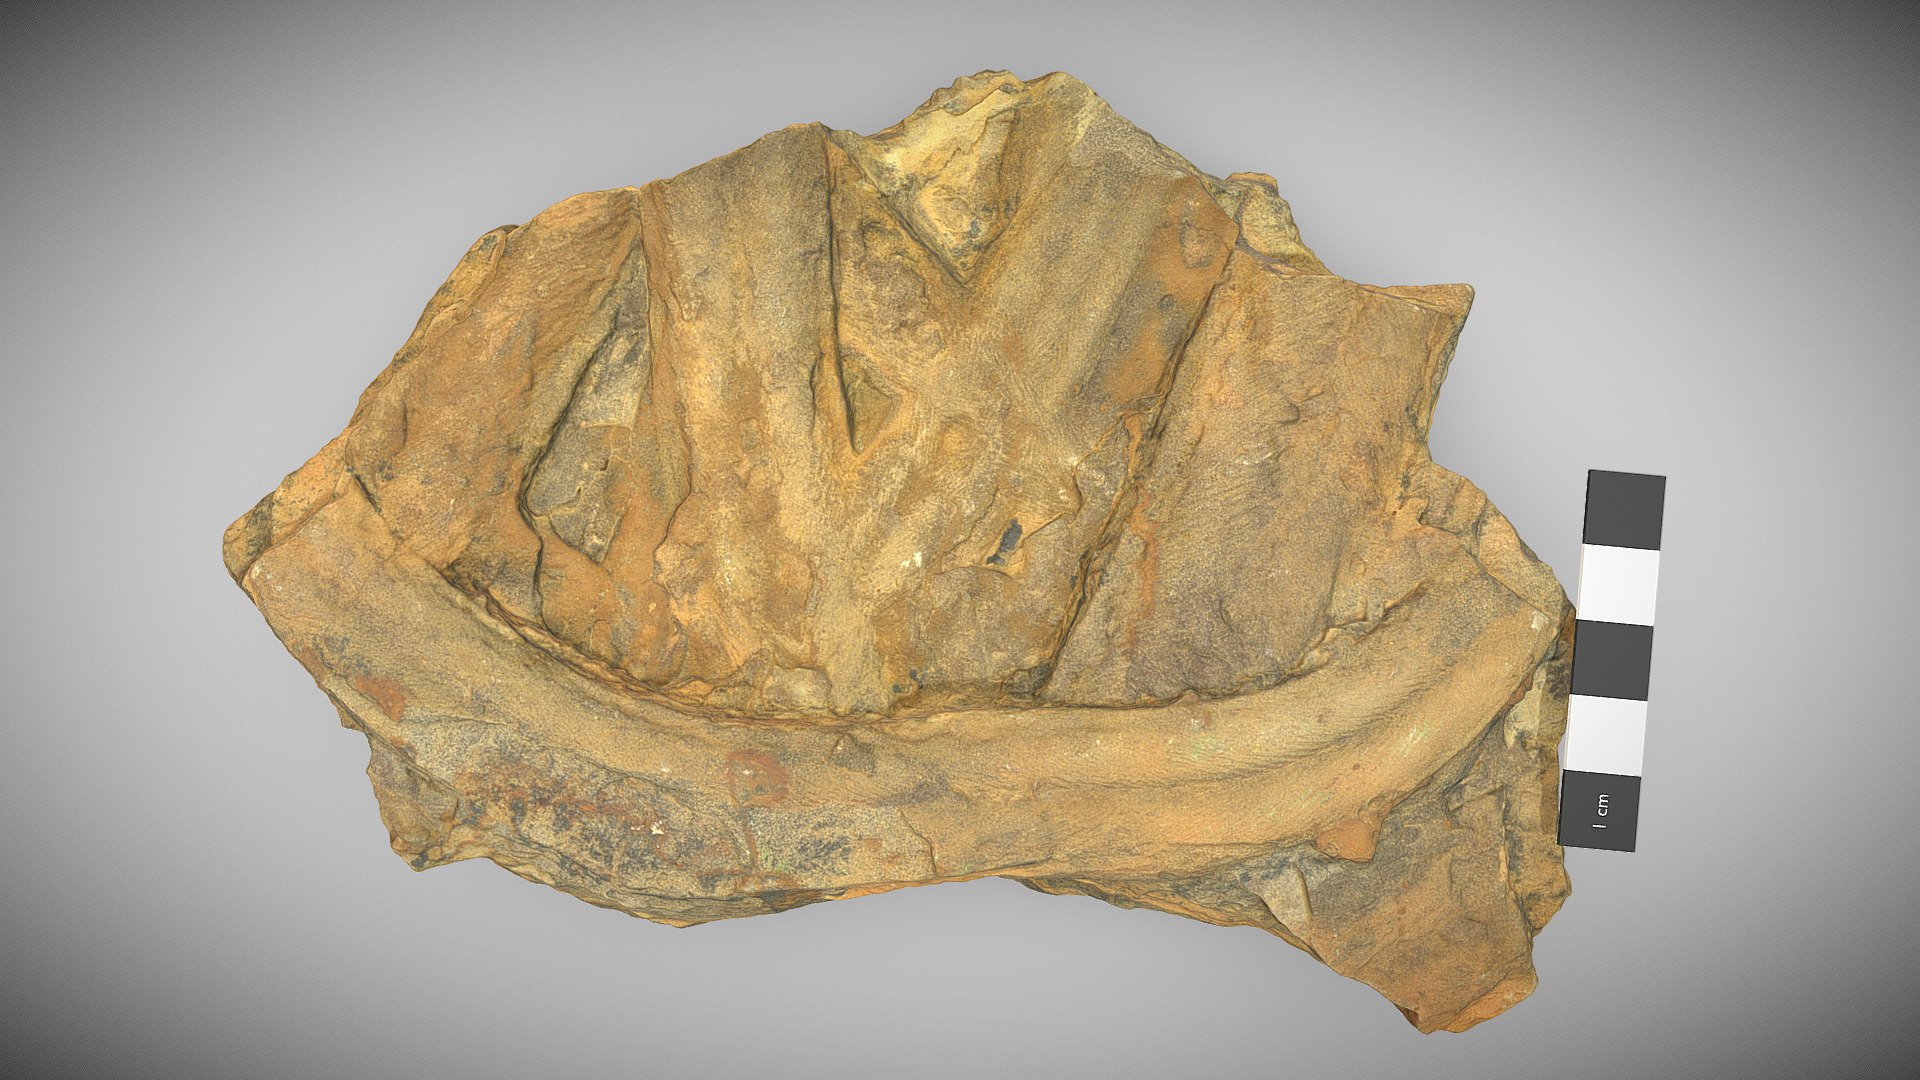 Cruziana (trilobite) trace fossils